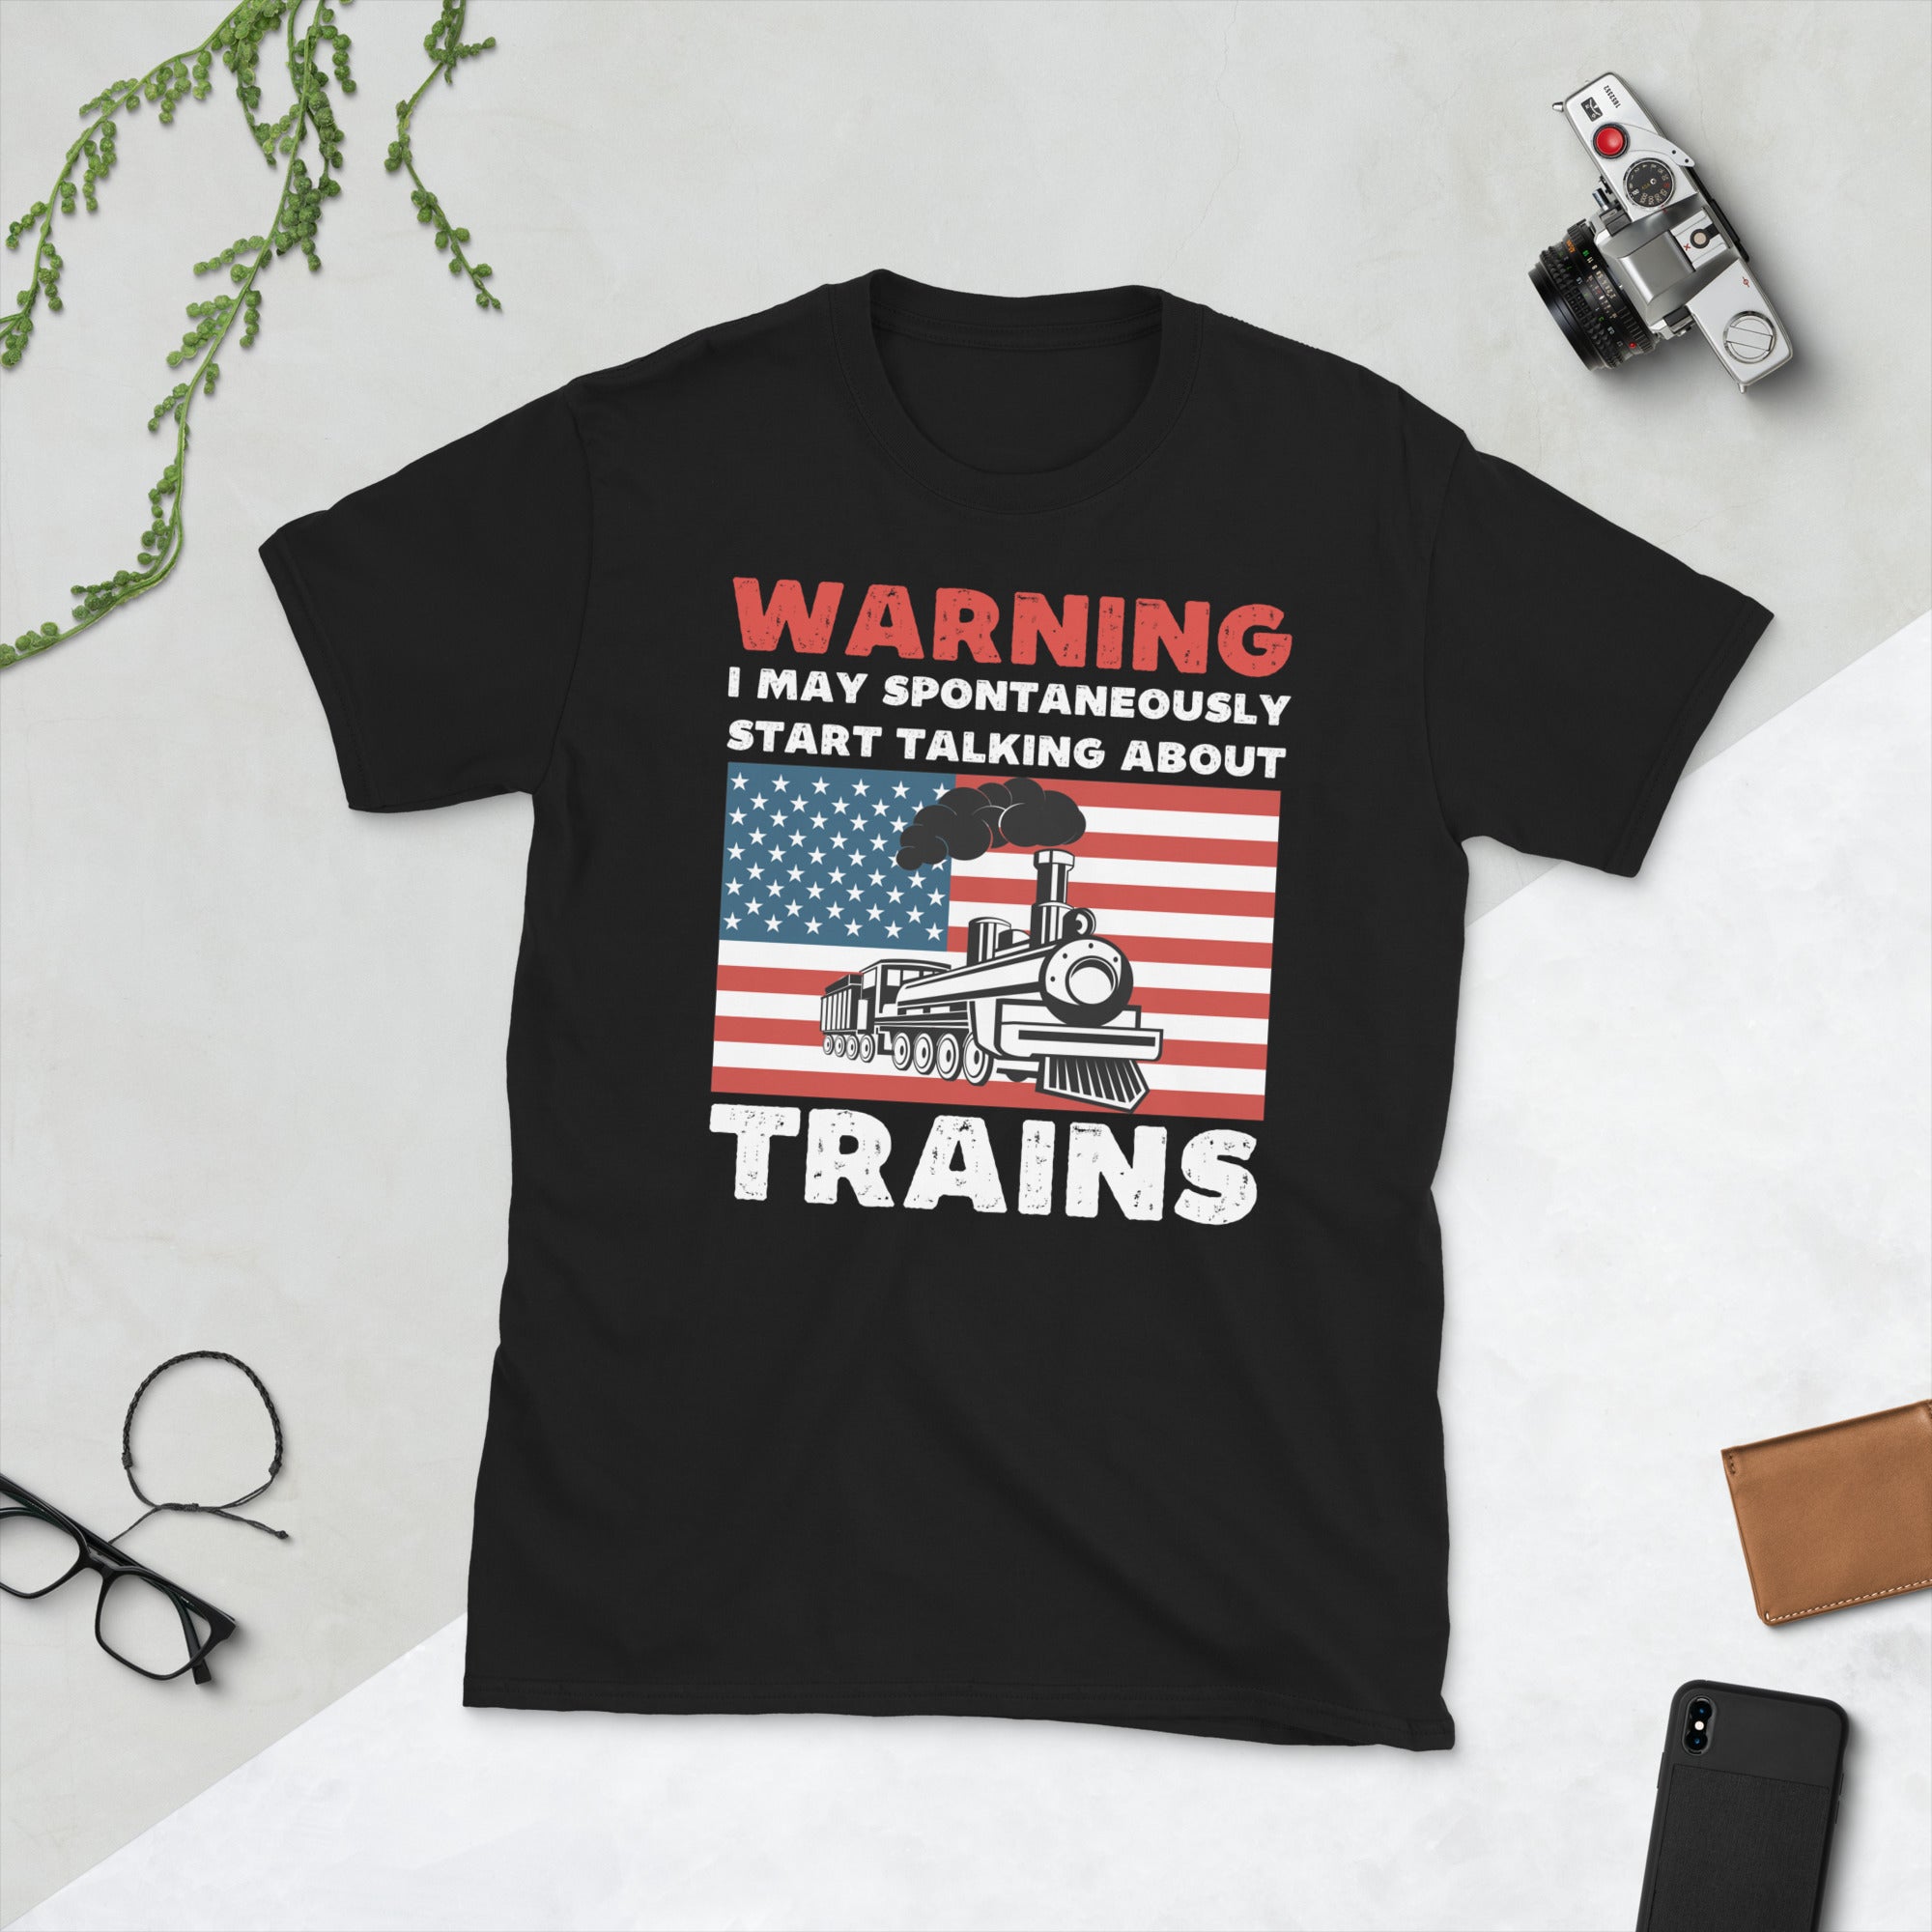 Warning May Start Talking About Trains T-Shirt, Train Engineer Shirt, Train Model Locomotive Gifts, Funny Railroad Tshirt, Vintage Train Tee